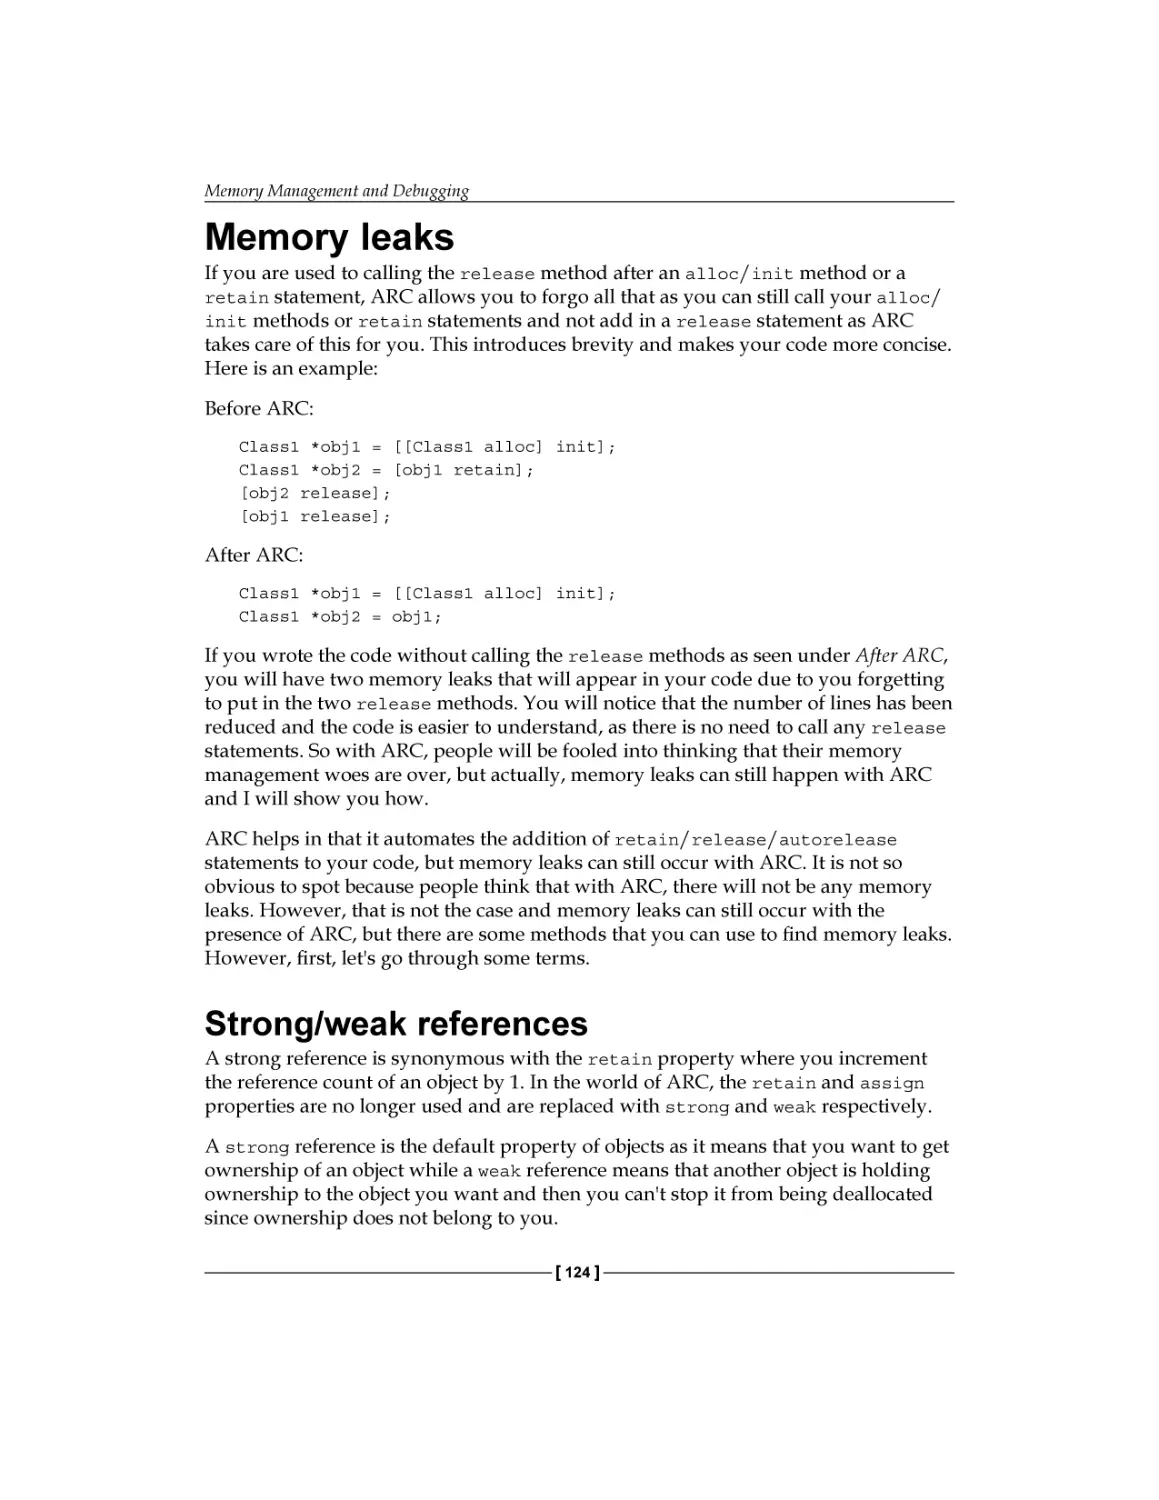 Memory leaks
Strong/weak references